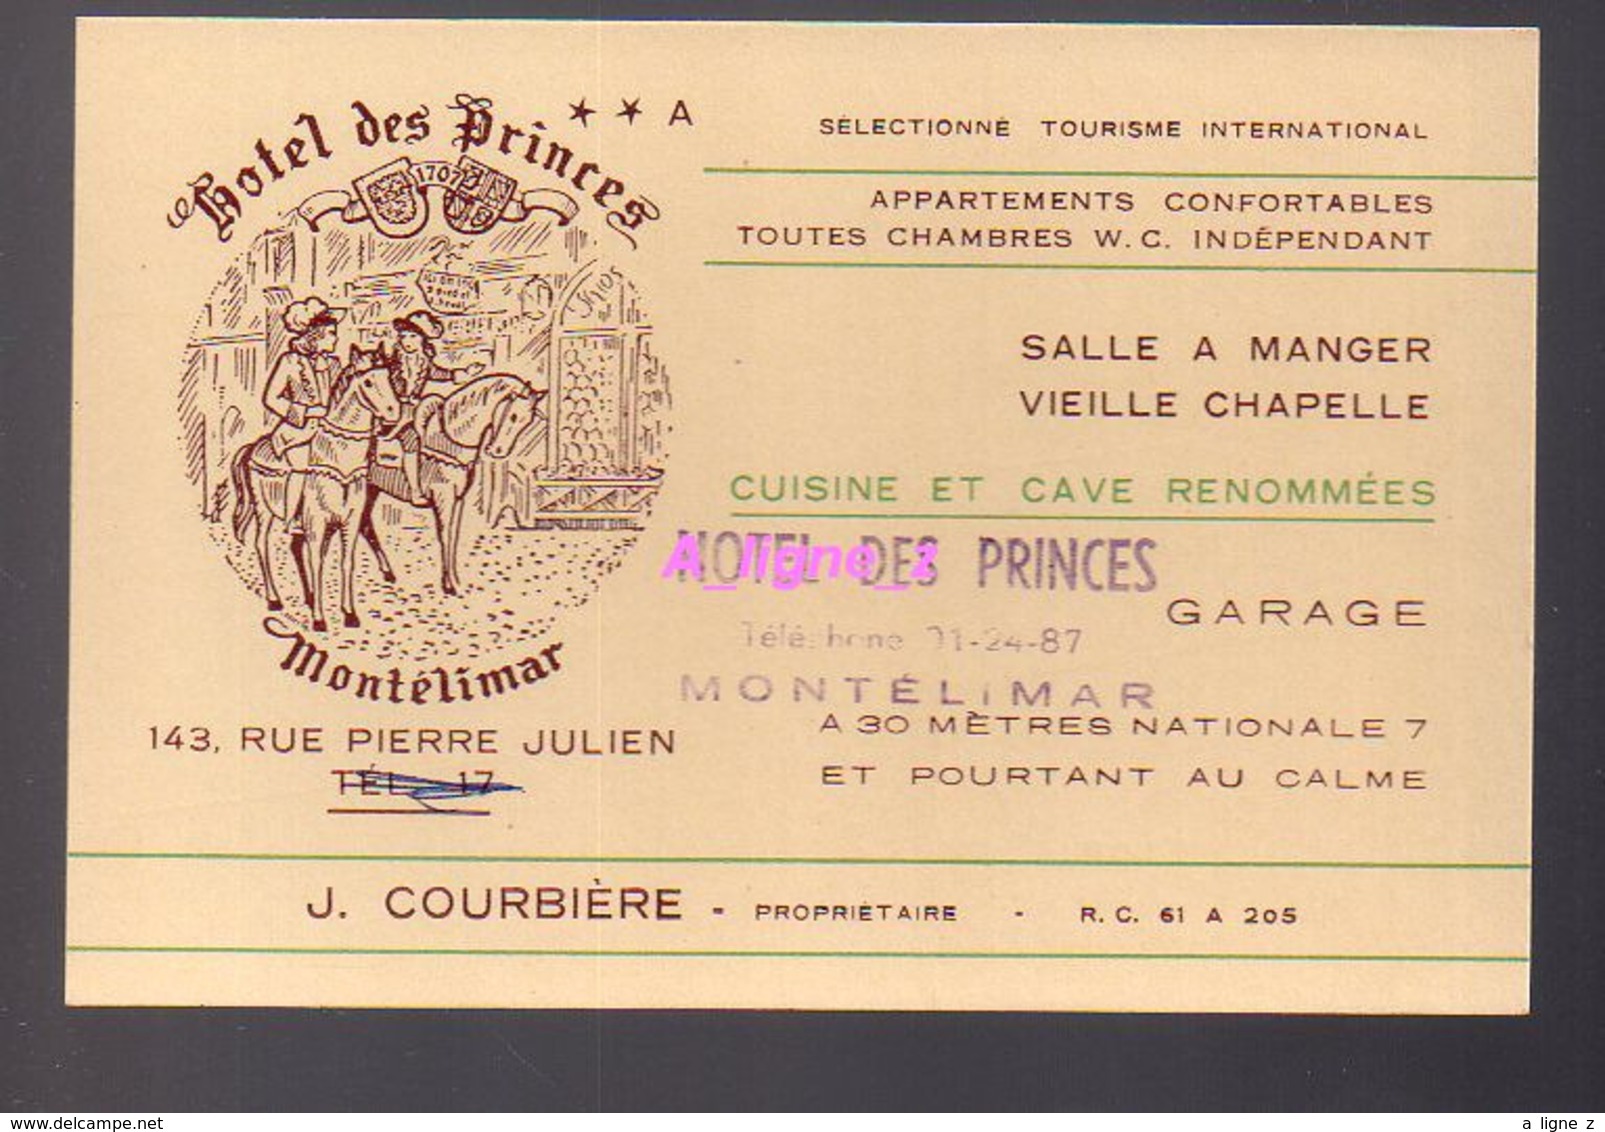 REF 407 : Carte De Visite Hotel Des Princes Montelimar Courbiere - Cartes De Visite